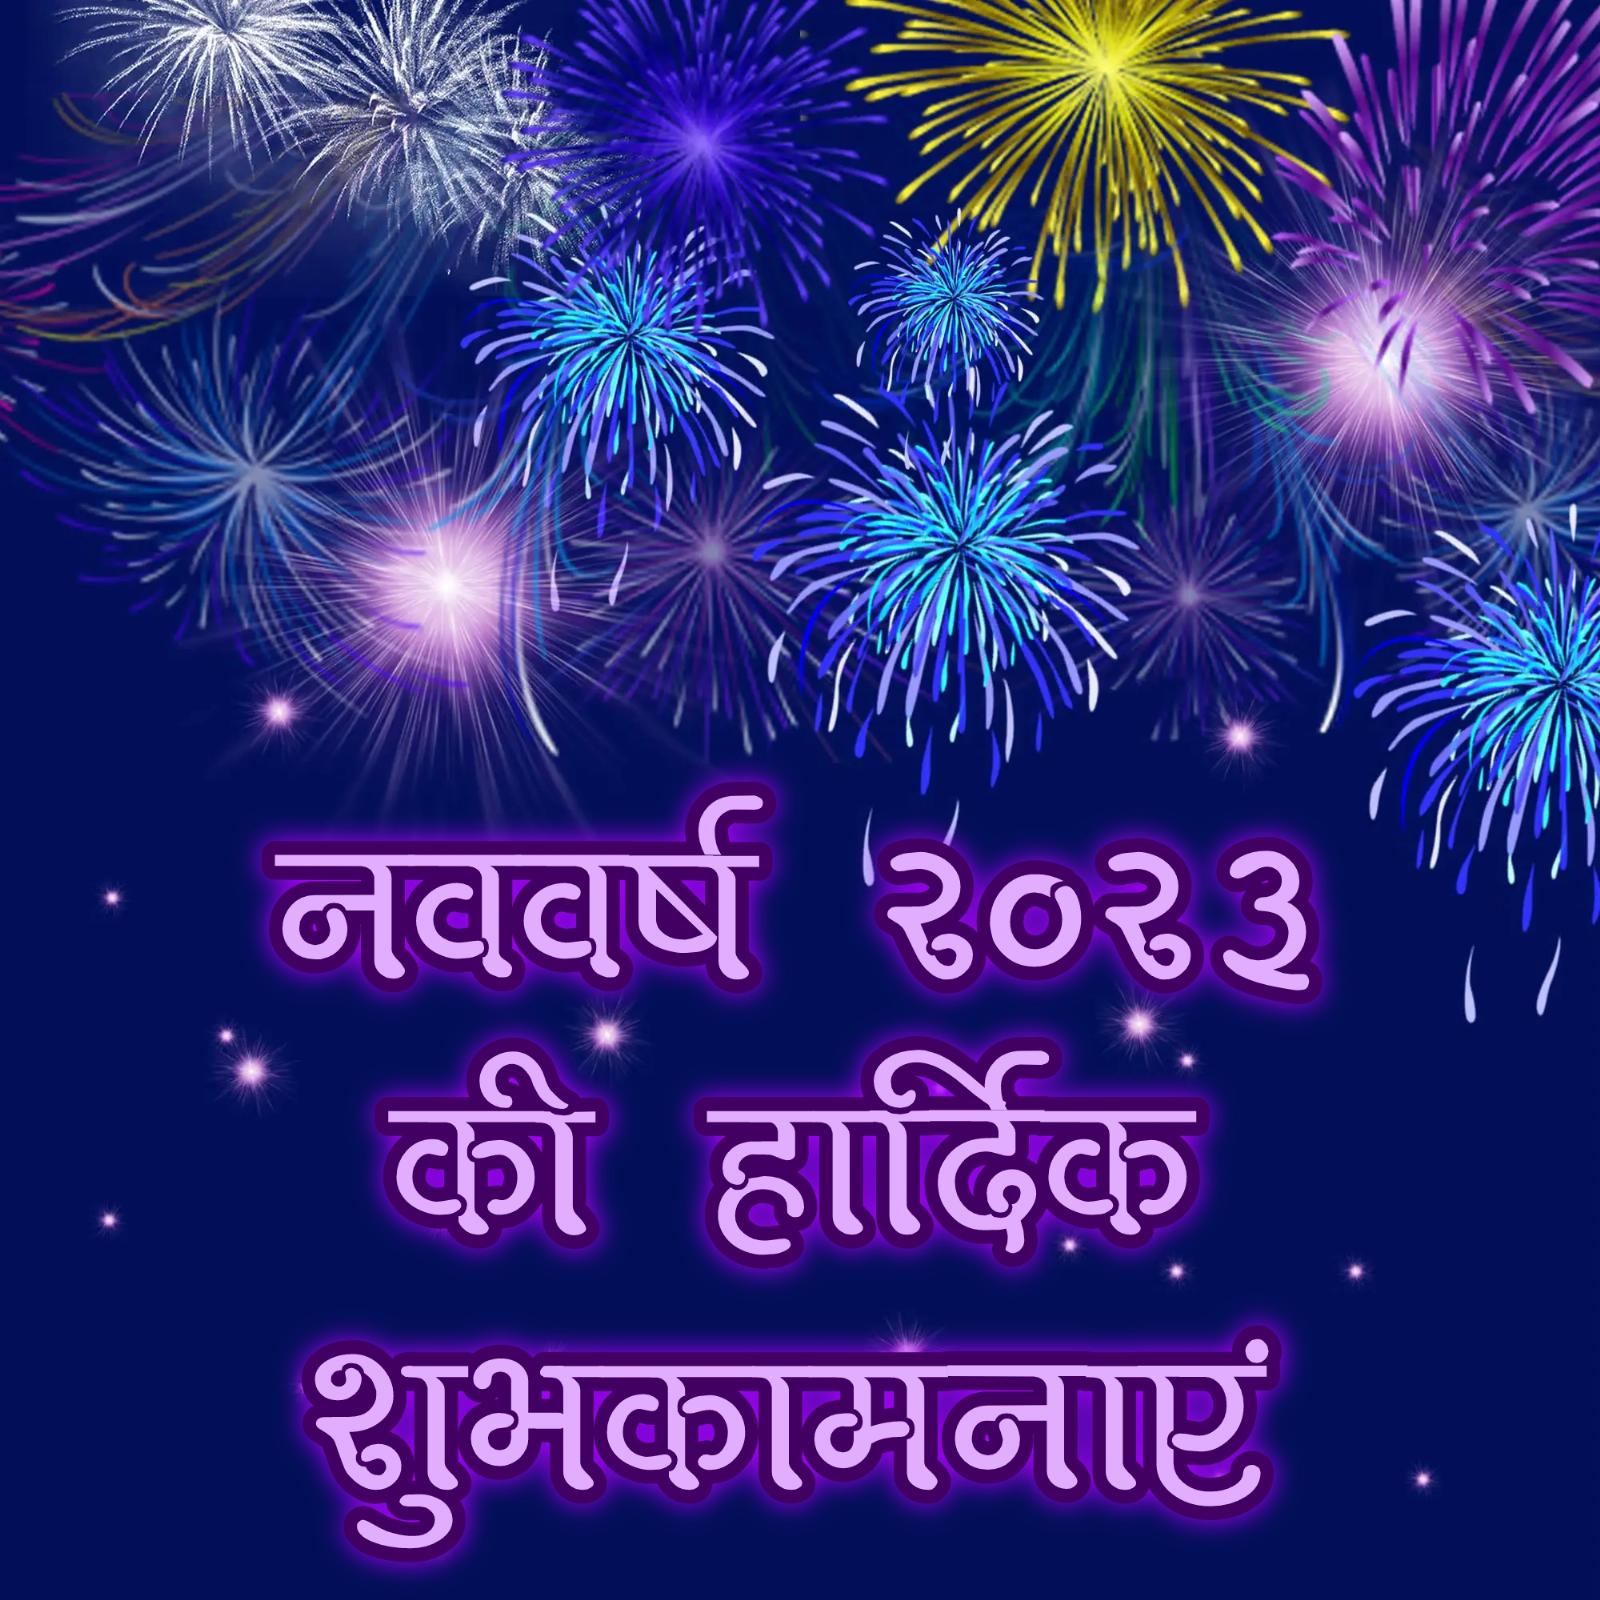 Navvarsh 2023 Ki Hardik Shubhkamnaye Happy New Year 2023 Images in Hindi